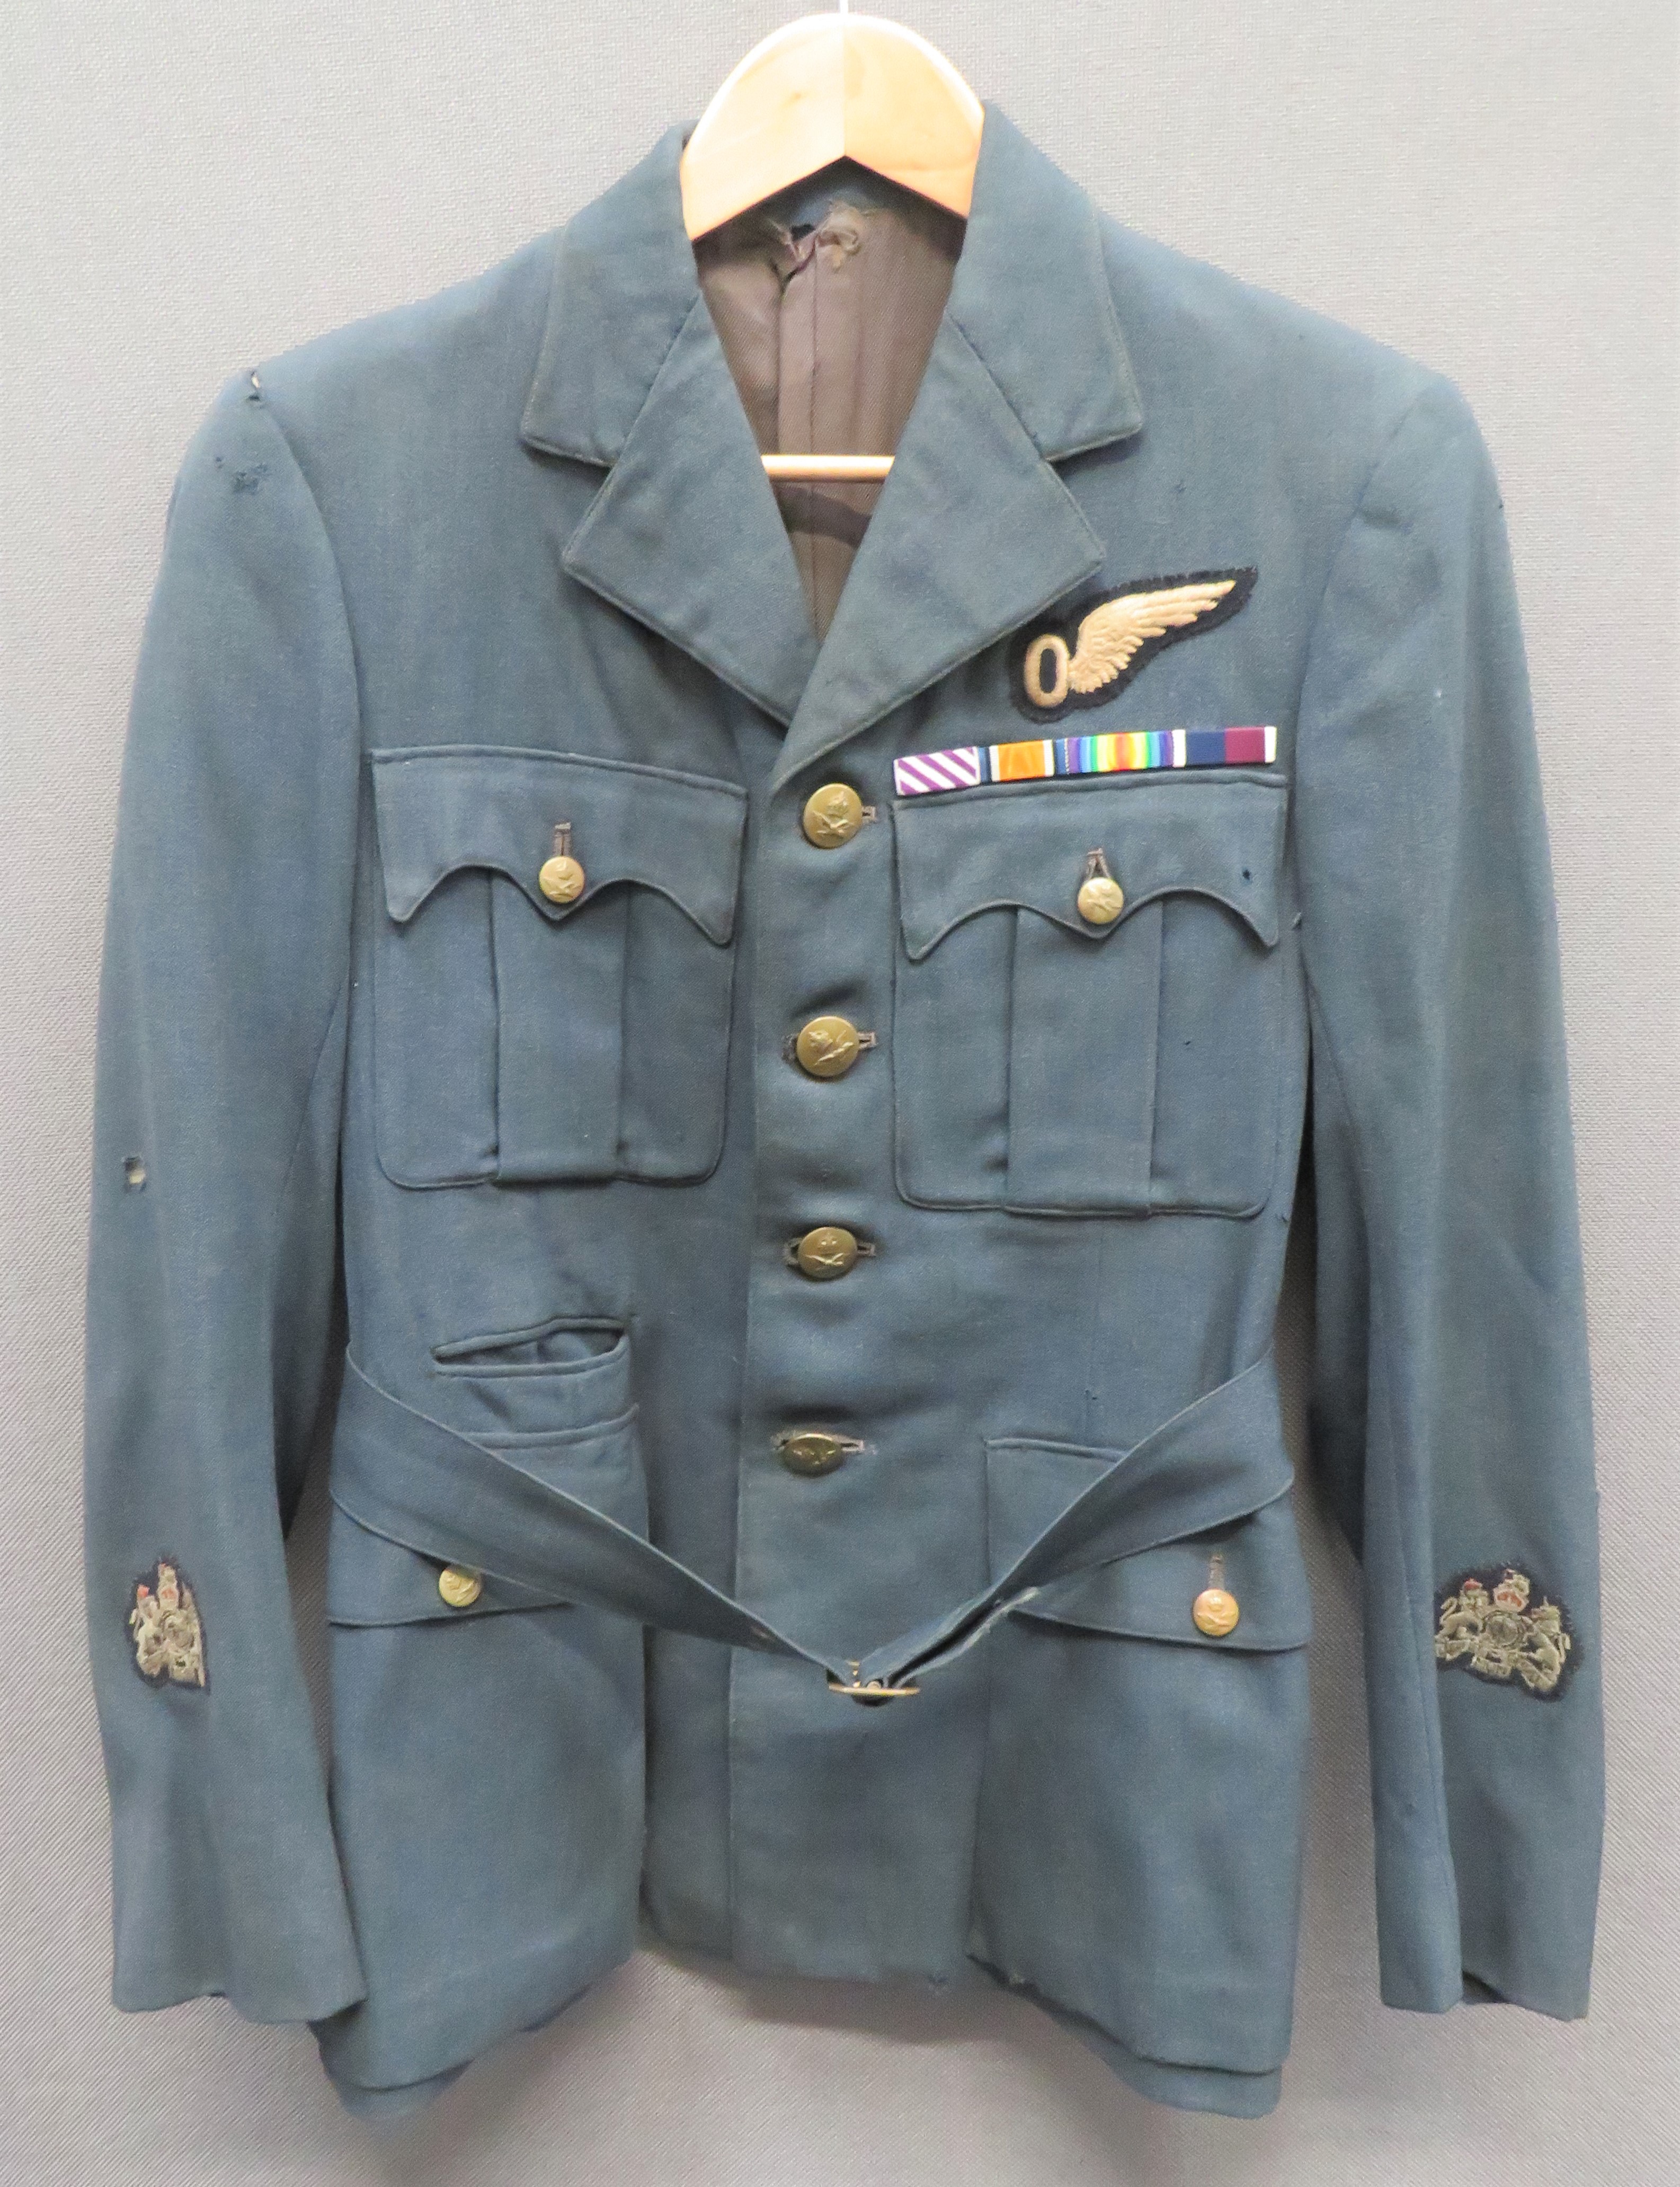 WW2 RAF Warrant Officer Observer's Service Dress Tunic blue grey, single breasted, open collar